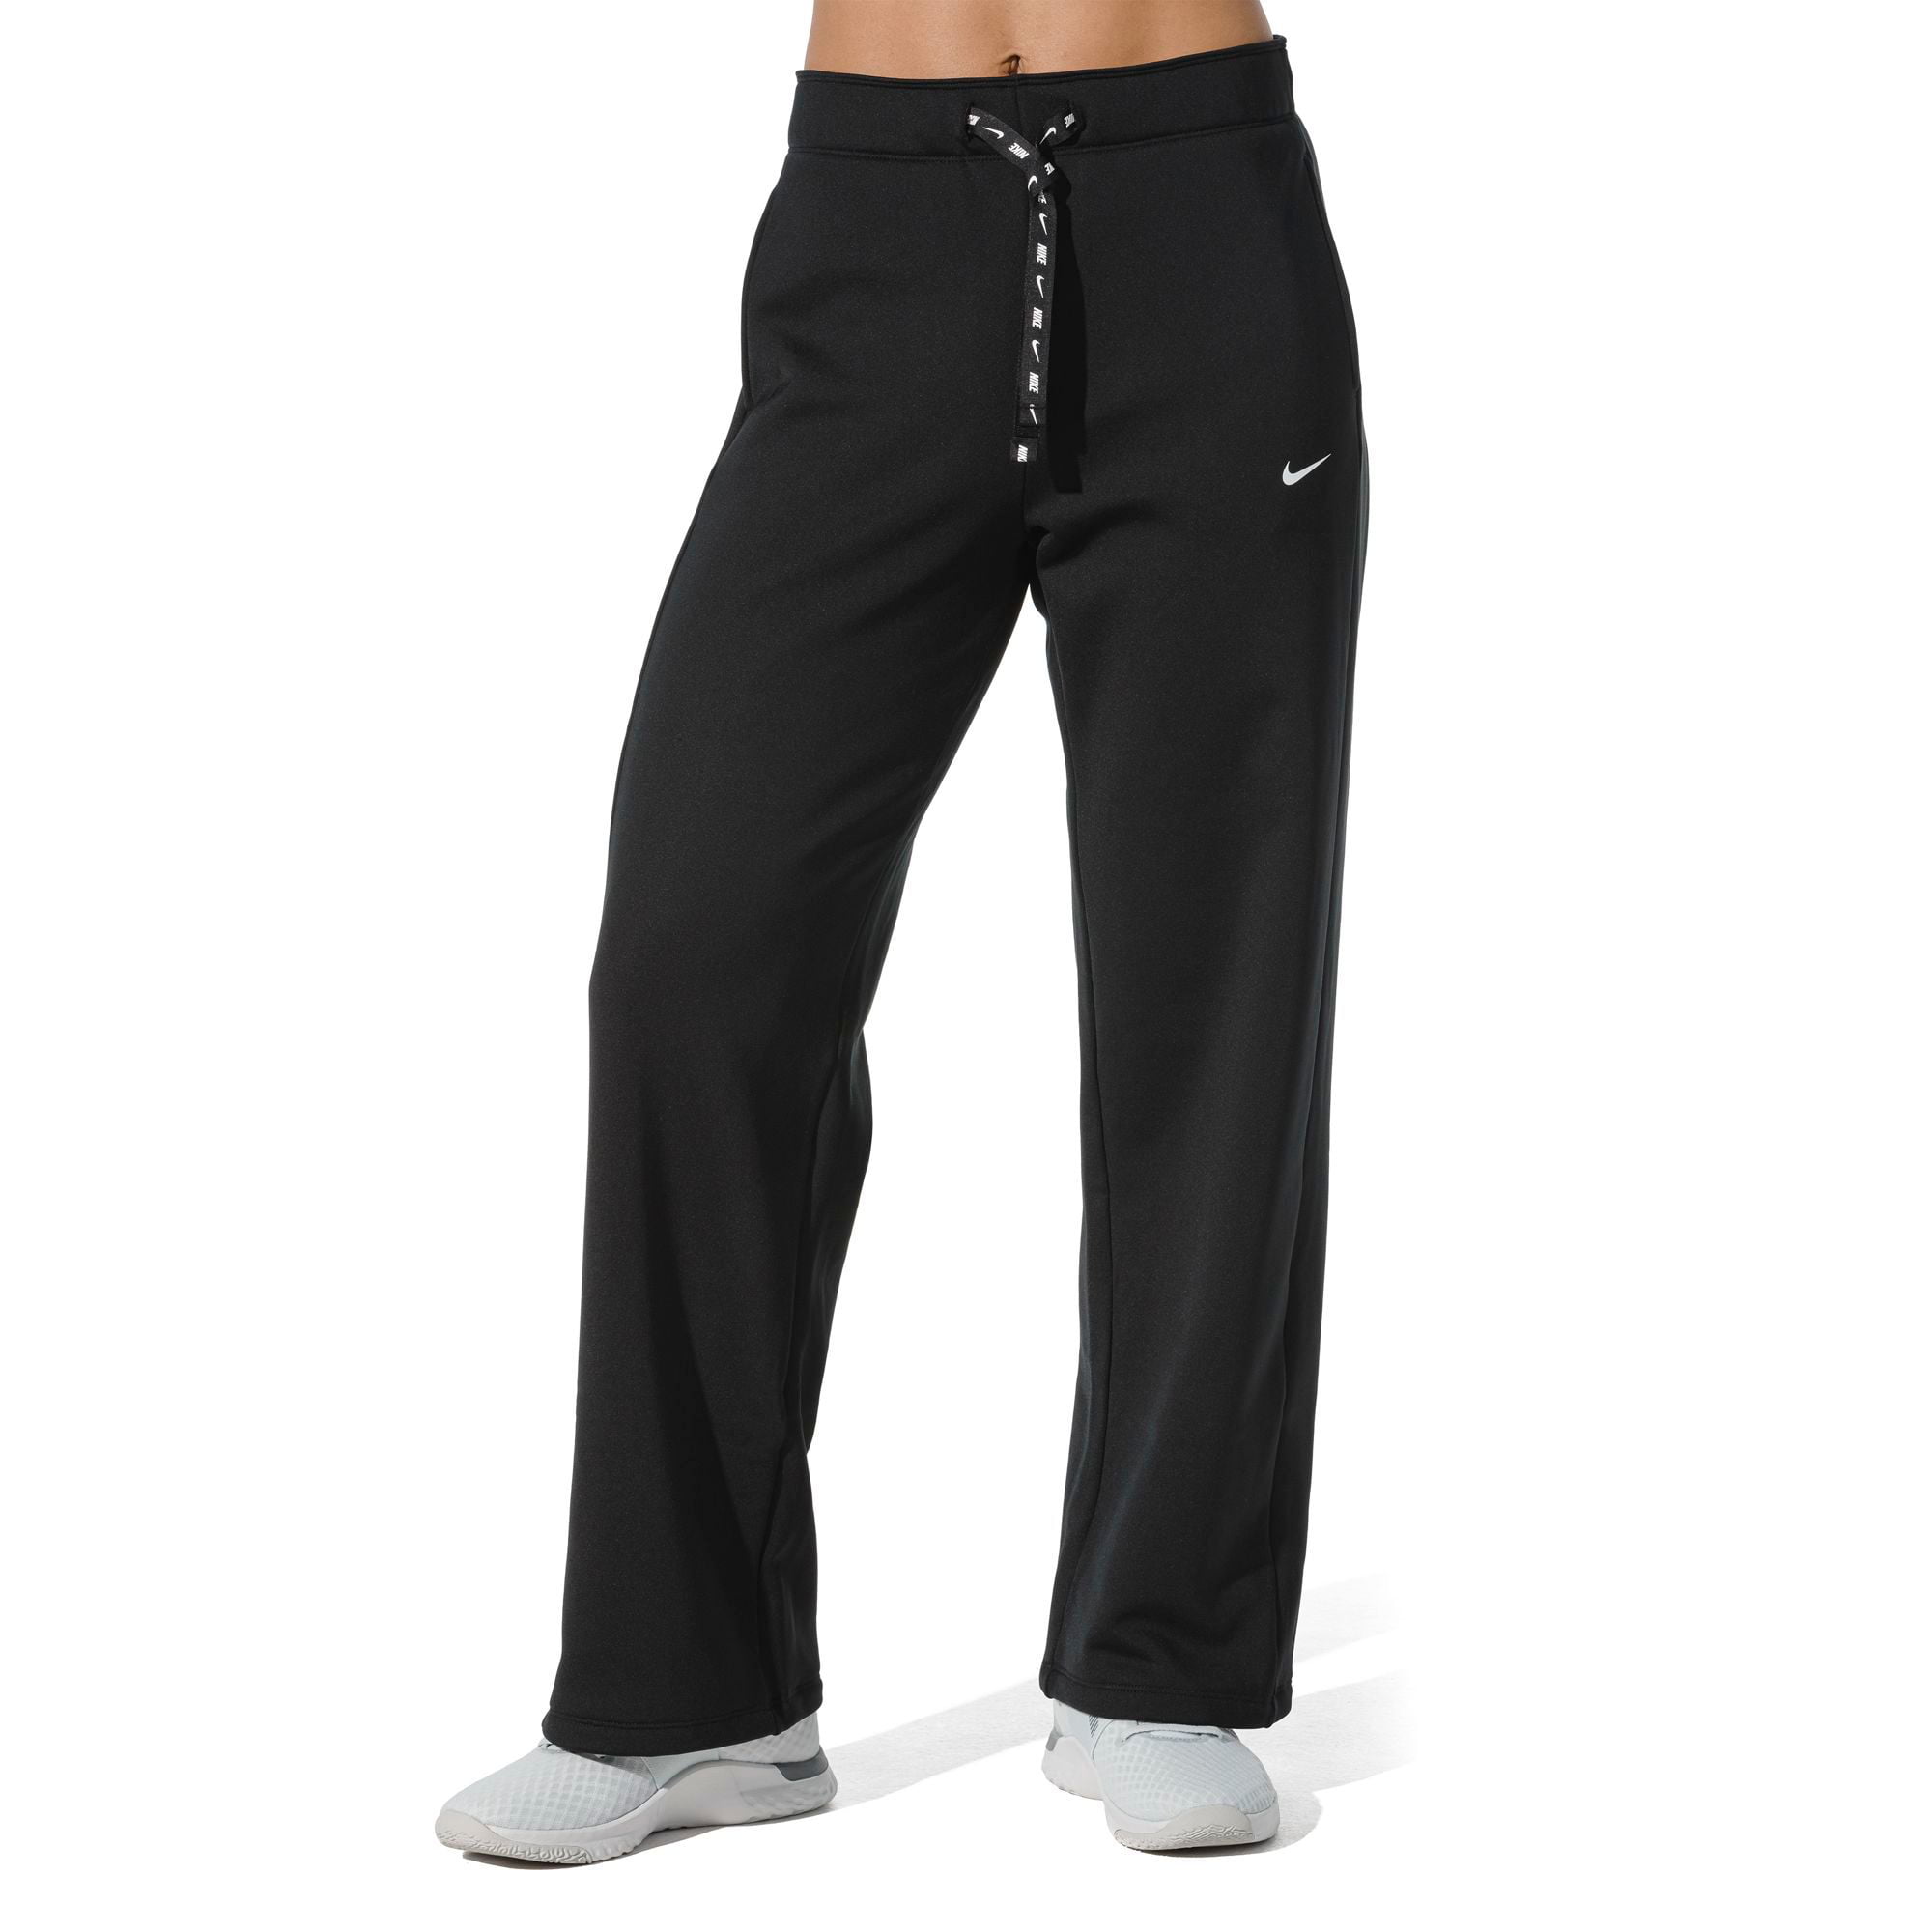 Nike - Nike Women's Therma Fleece Training Pants - Walmart.com ...